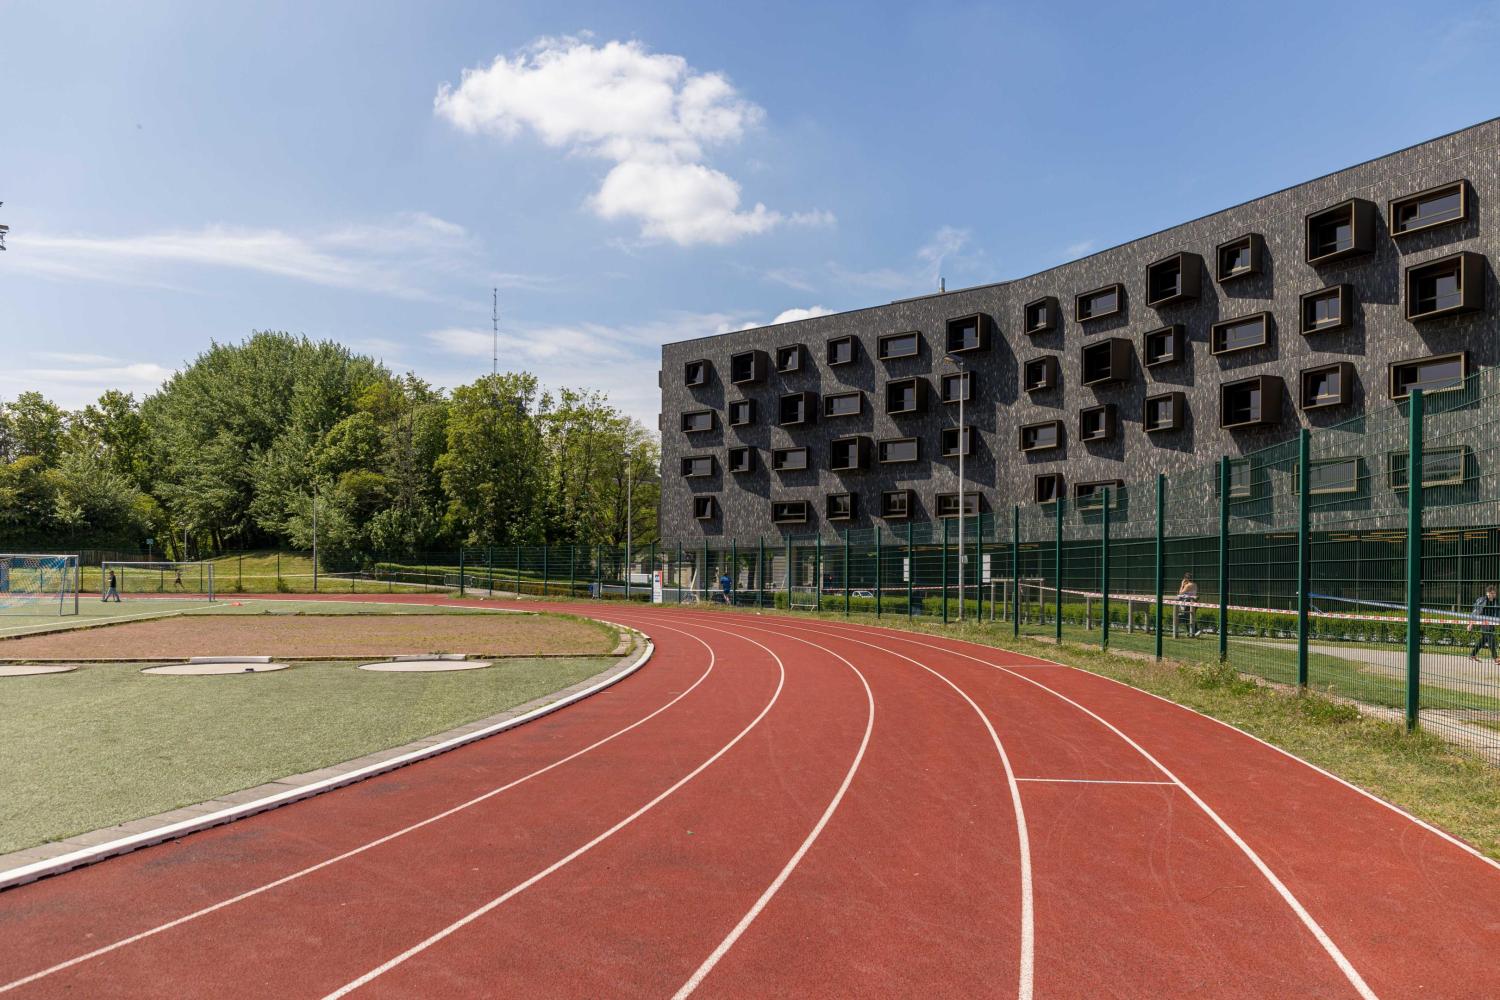 2022_Atletiekpiste_Sportinfrastructuur_Etterbeek_VUB